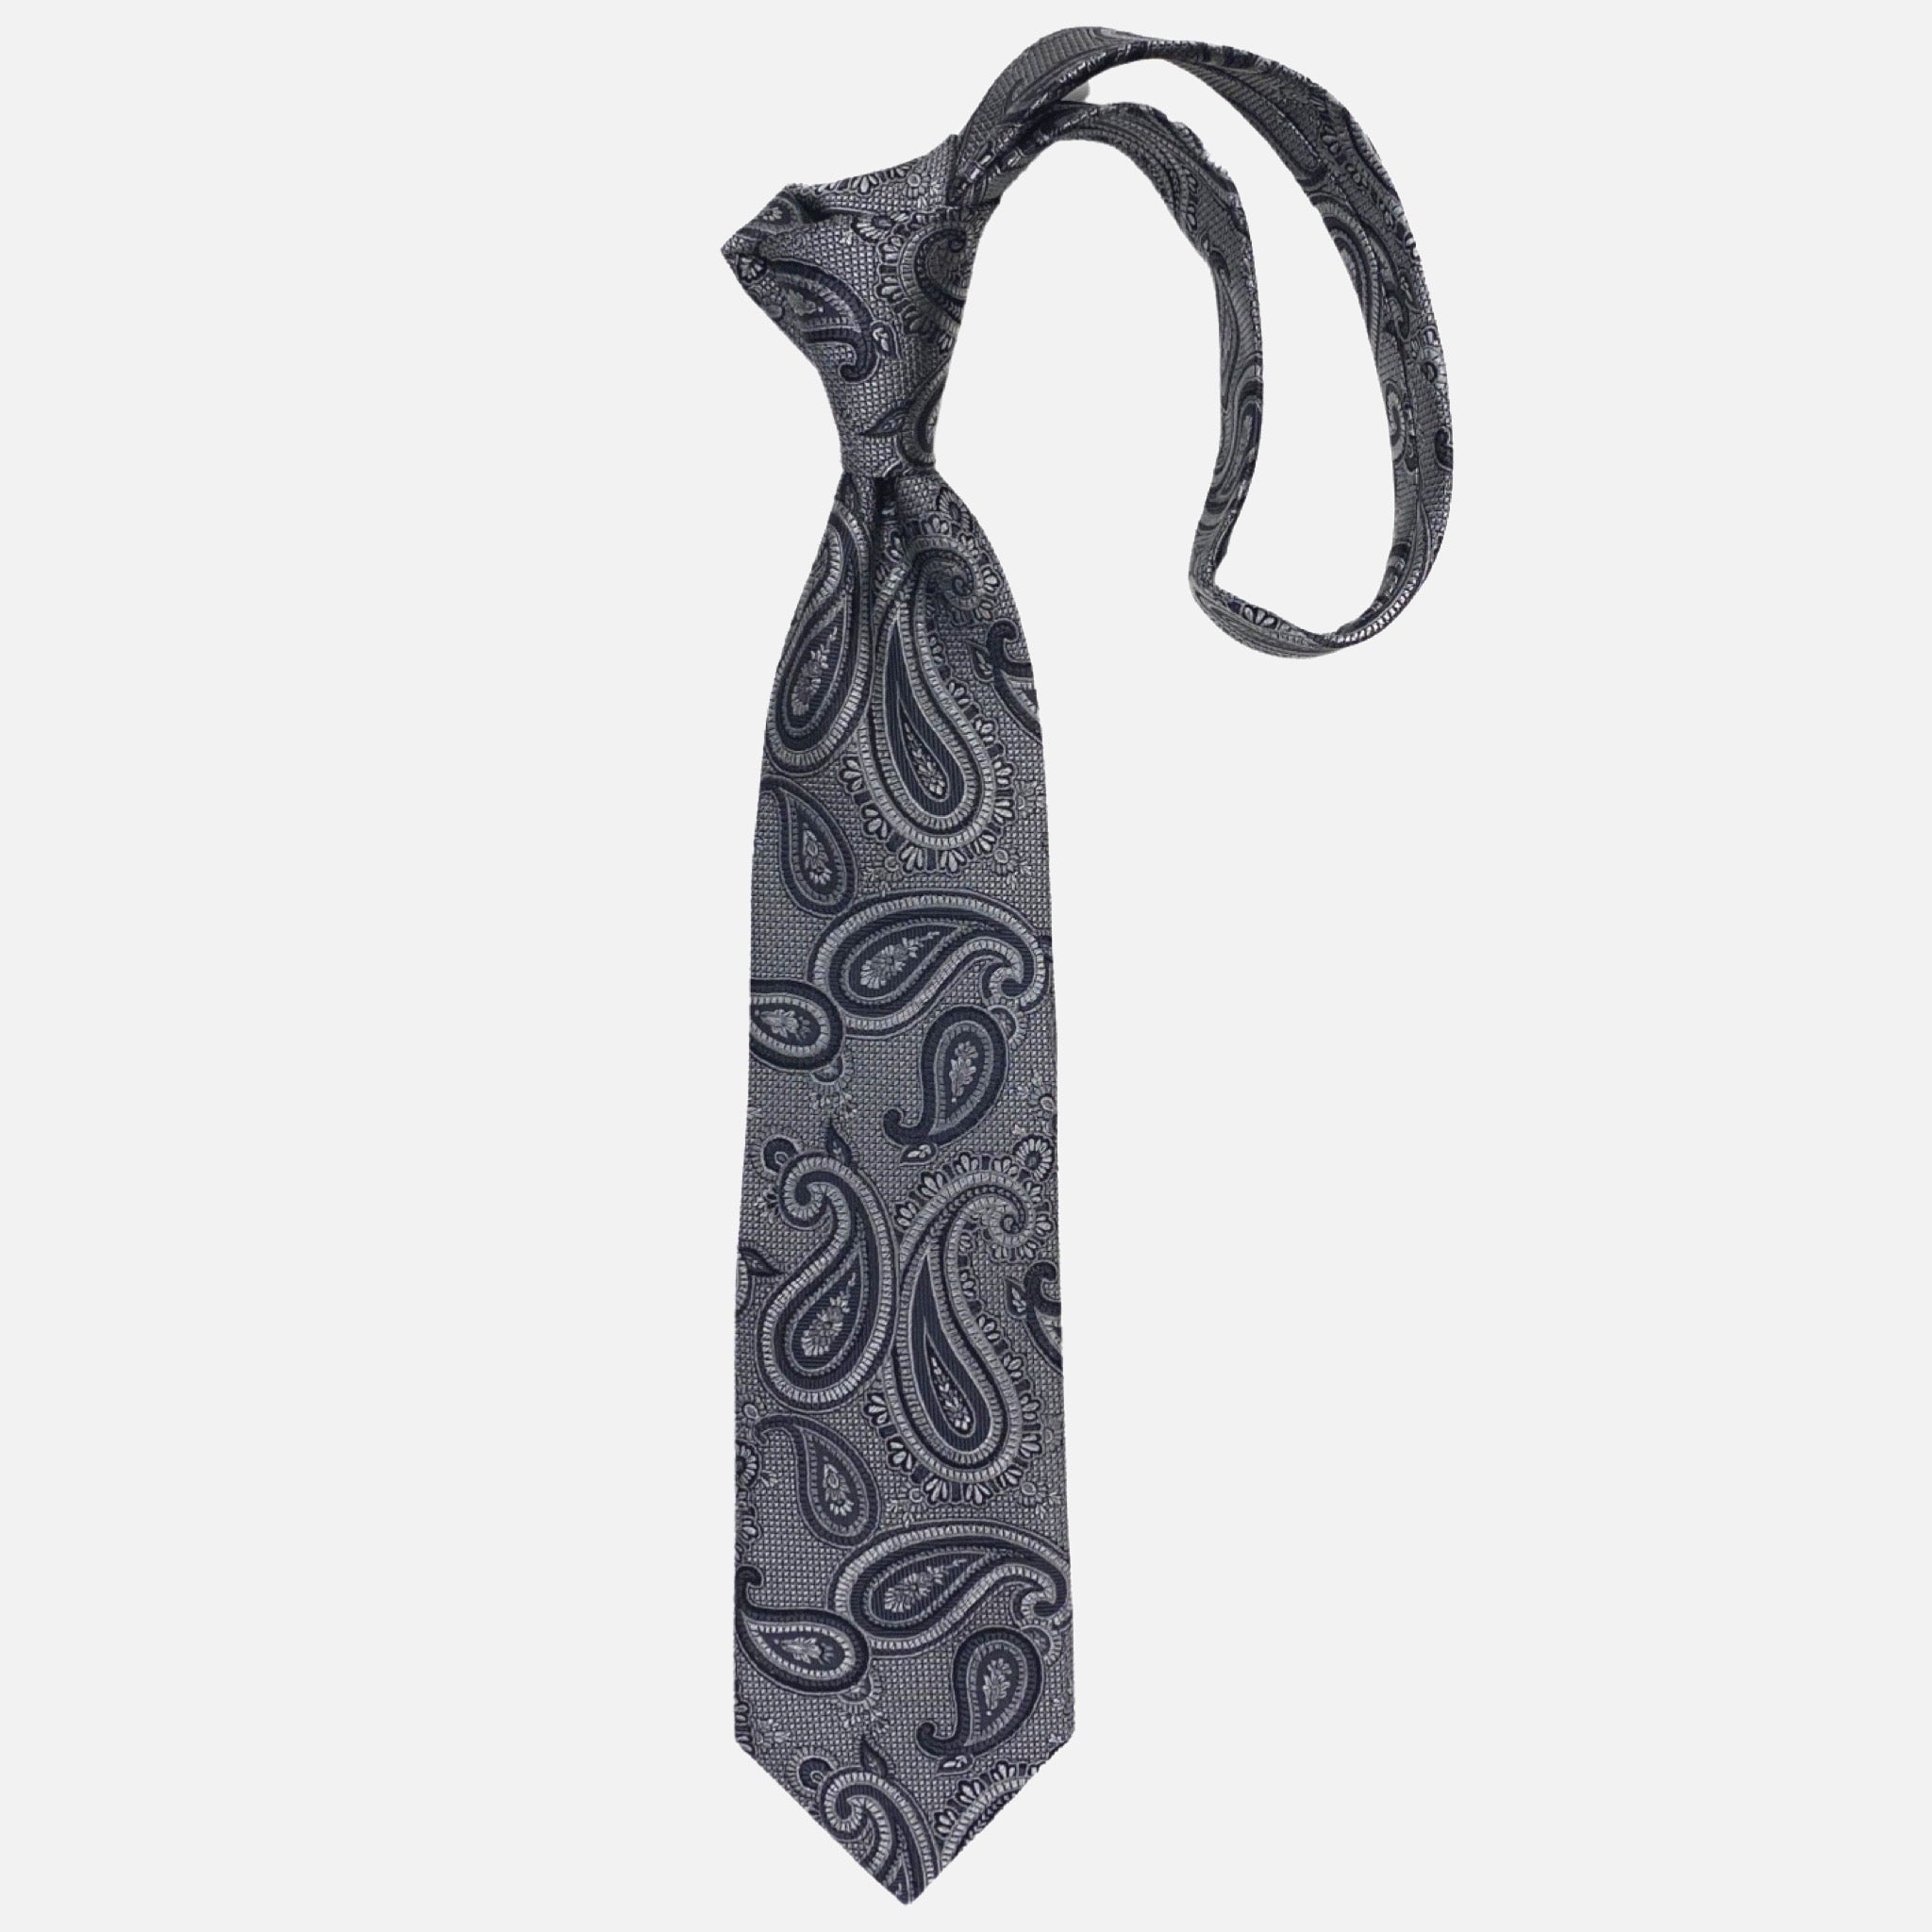 100% Silk tie made in USA | Textured Silk fabrication